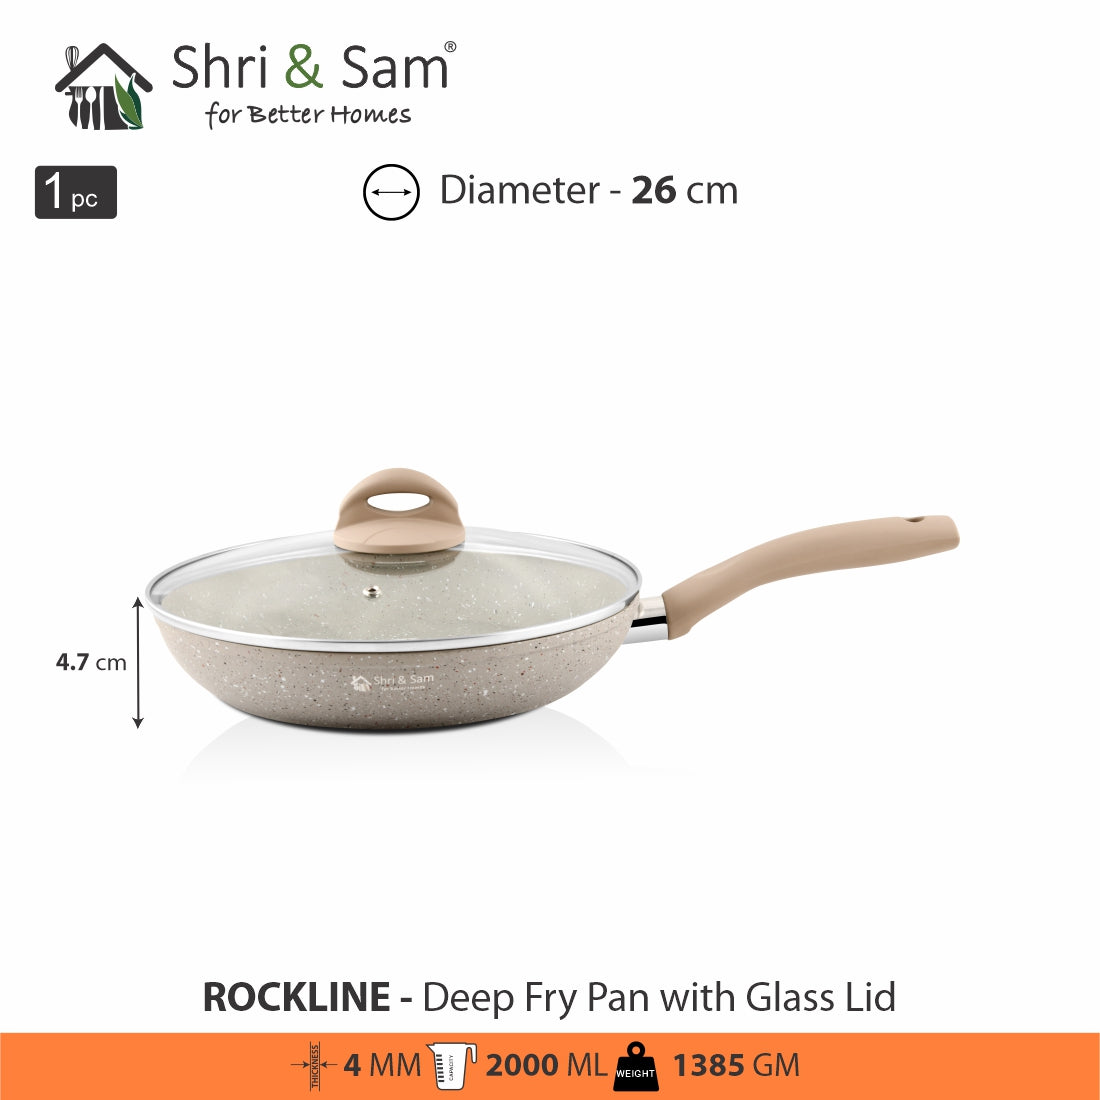 Aluminium Non-Stick Deep Fry Pan with Glass Lid Rockline